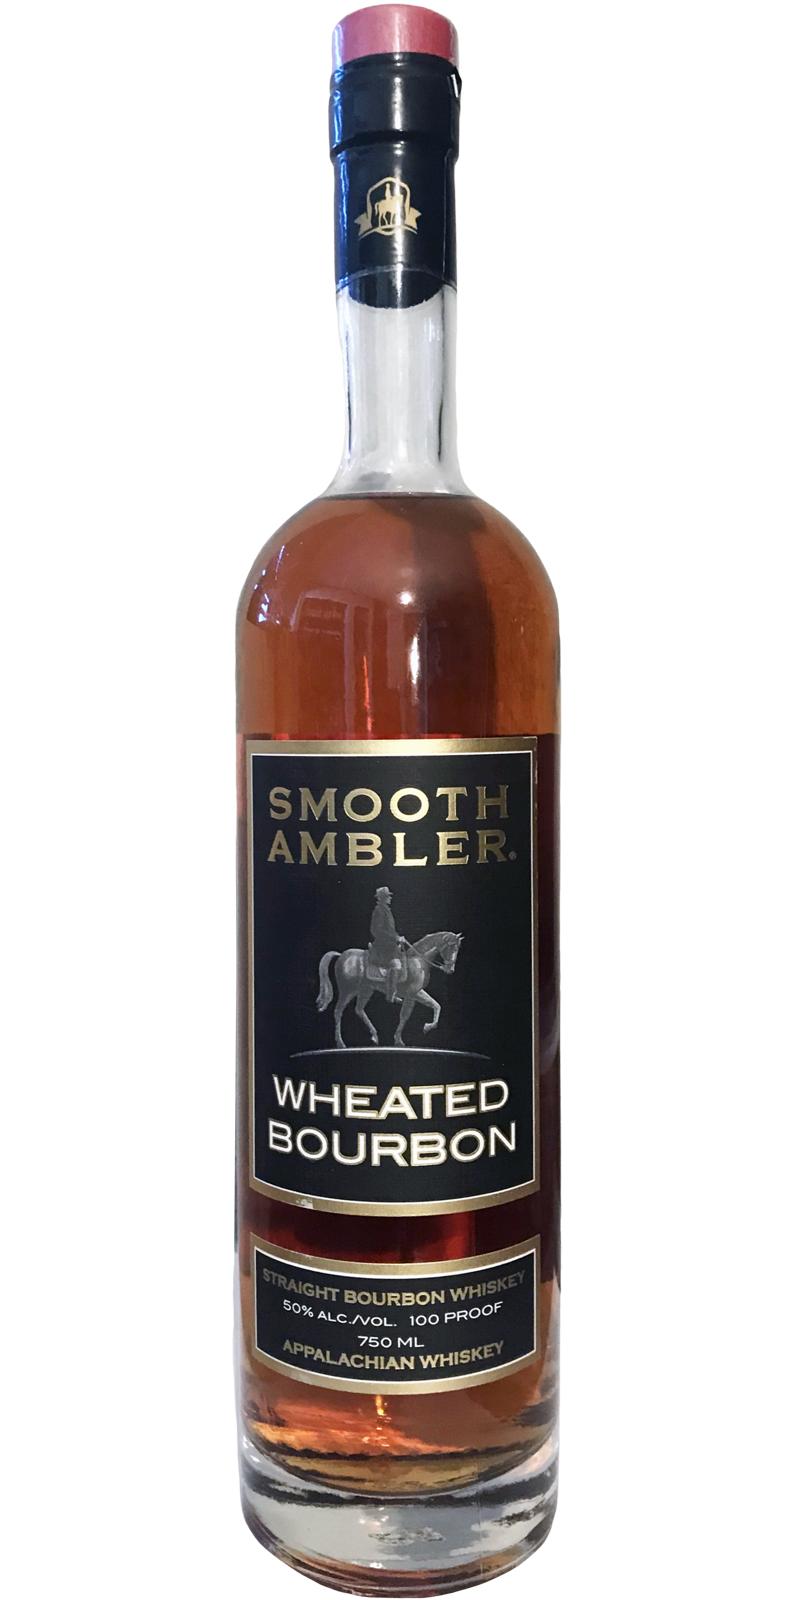 Smooth Ambler Wheated Bourbon Appalachian Whisky 50% 750ml